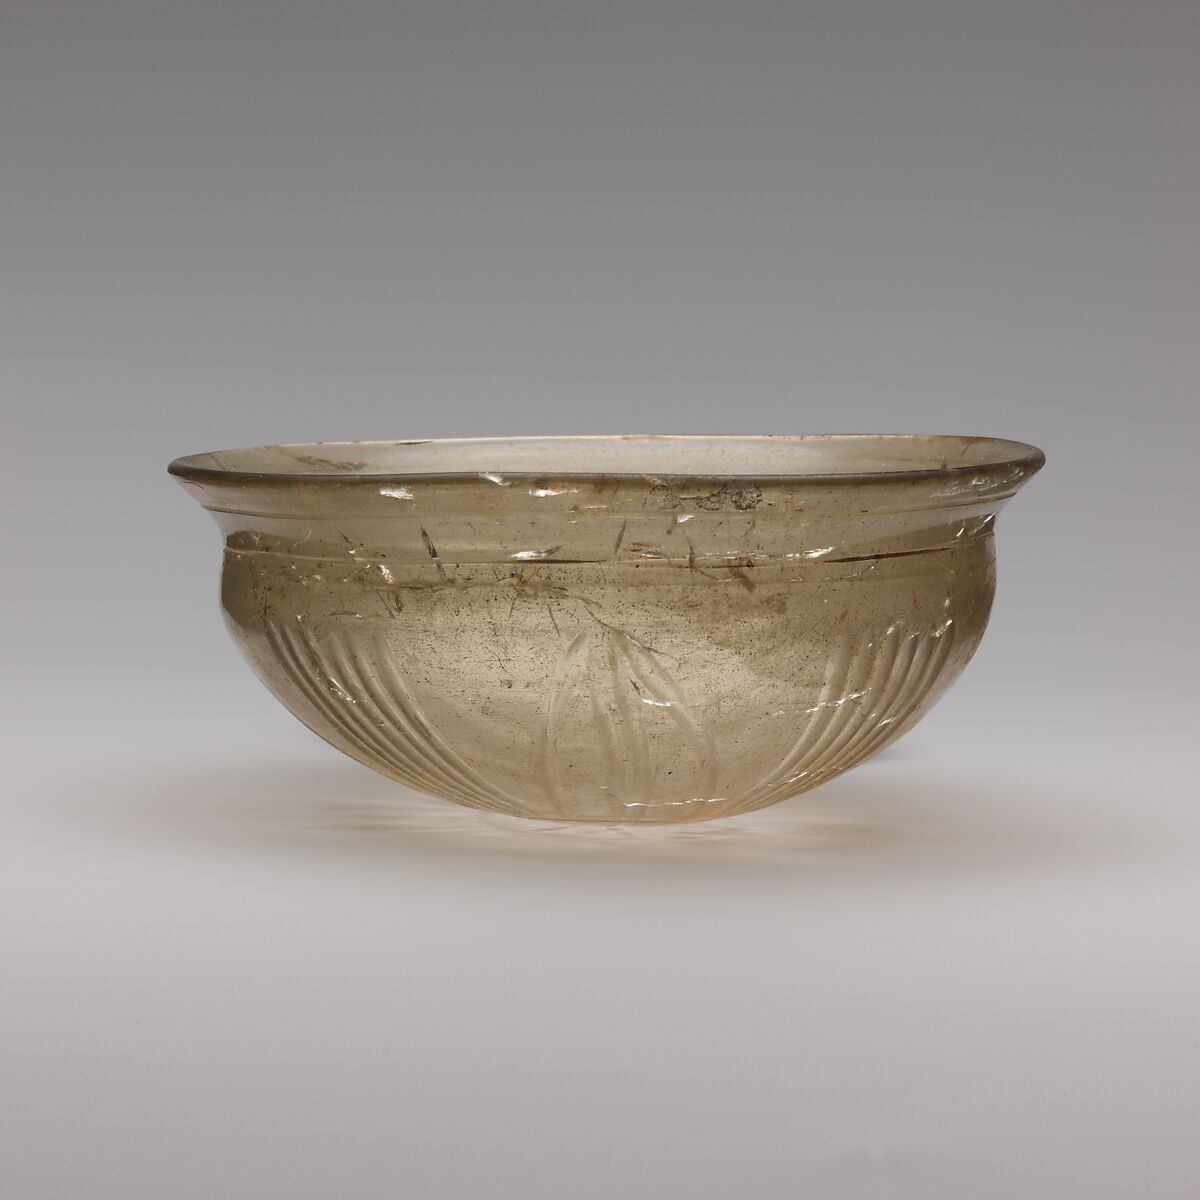 Glass phiale (libation bowl), Glass, Greek, Eastern Mediterranean 